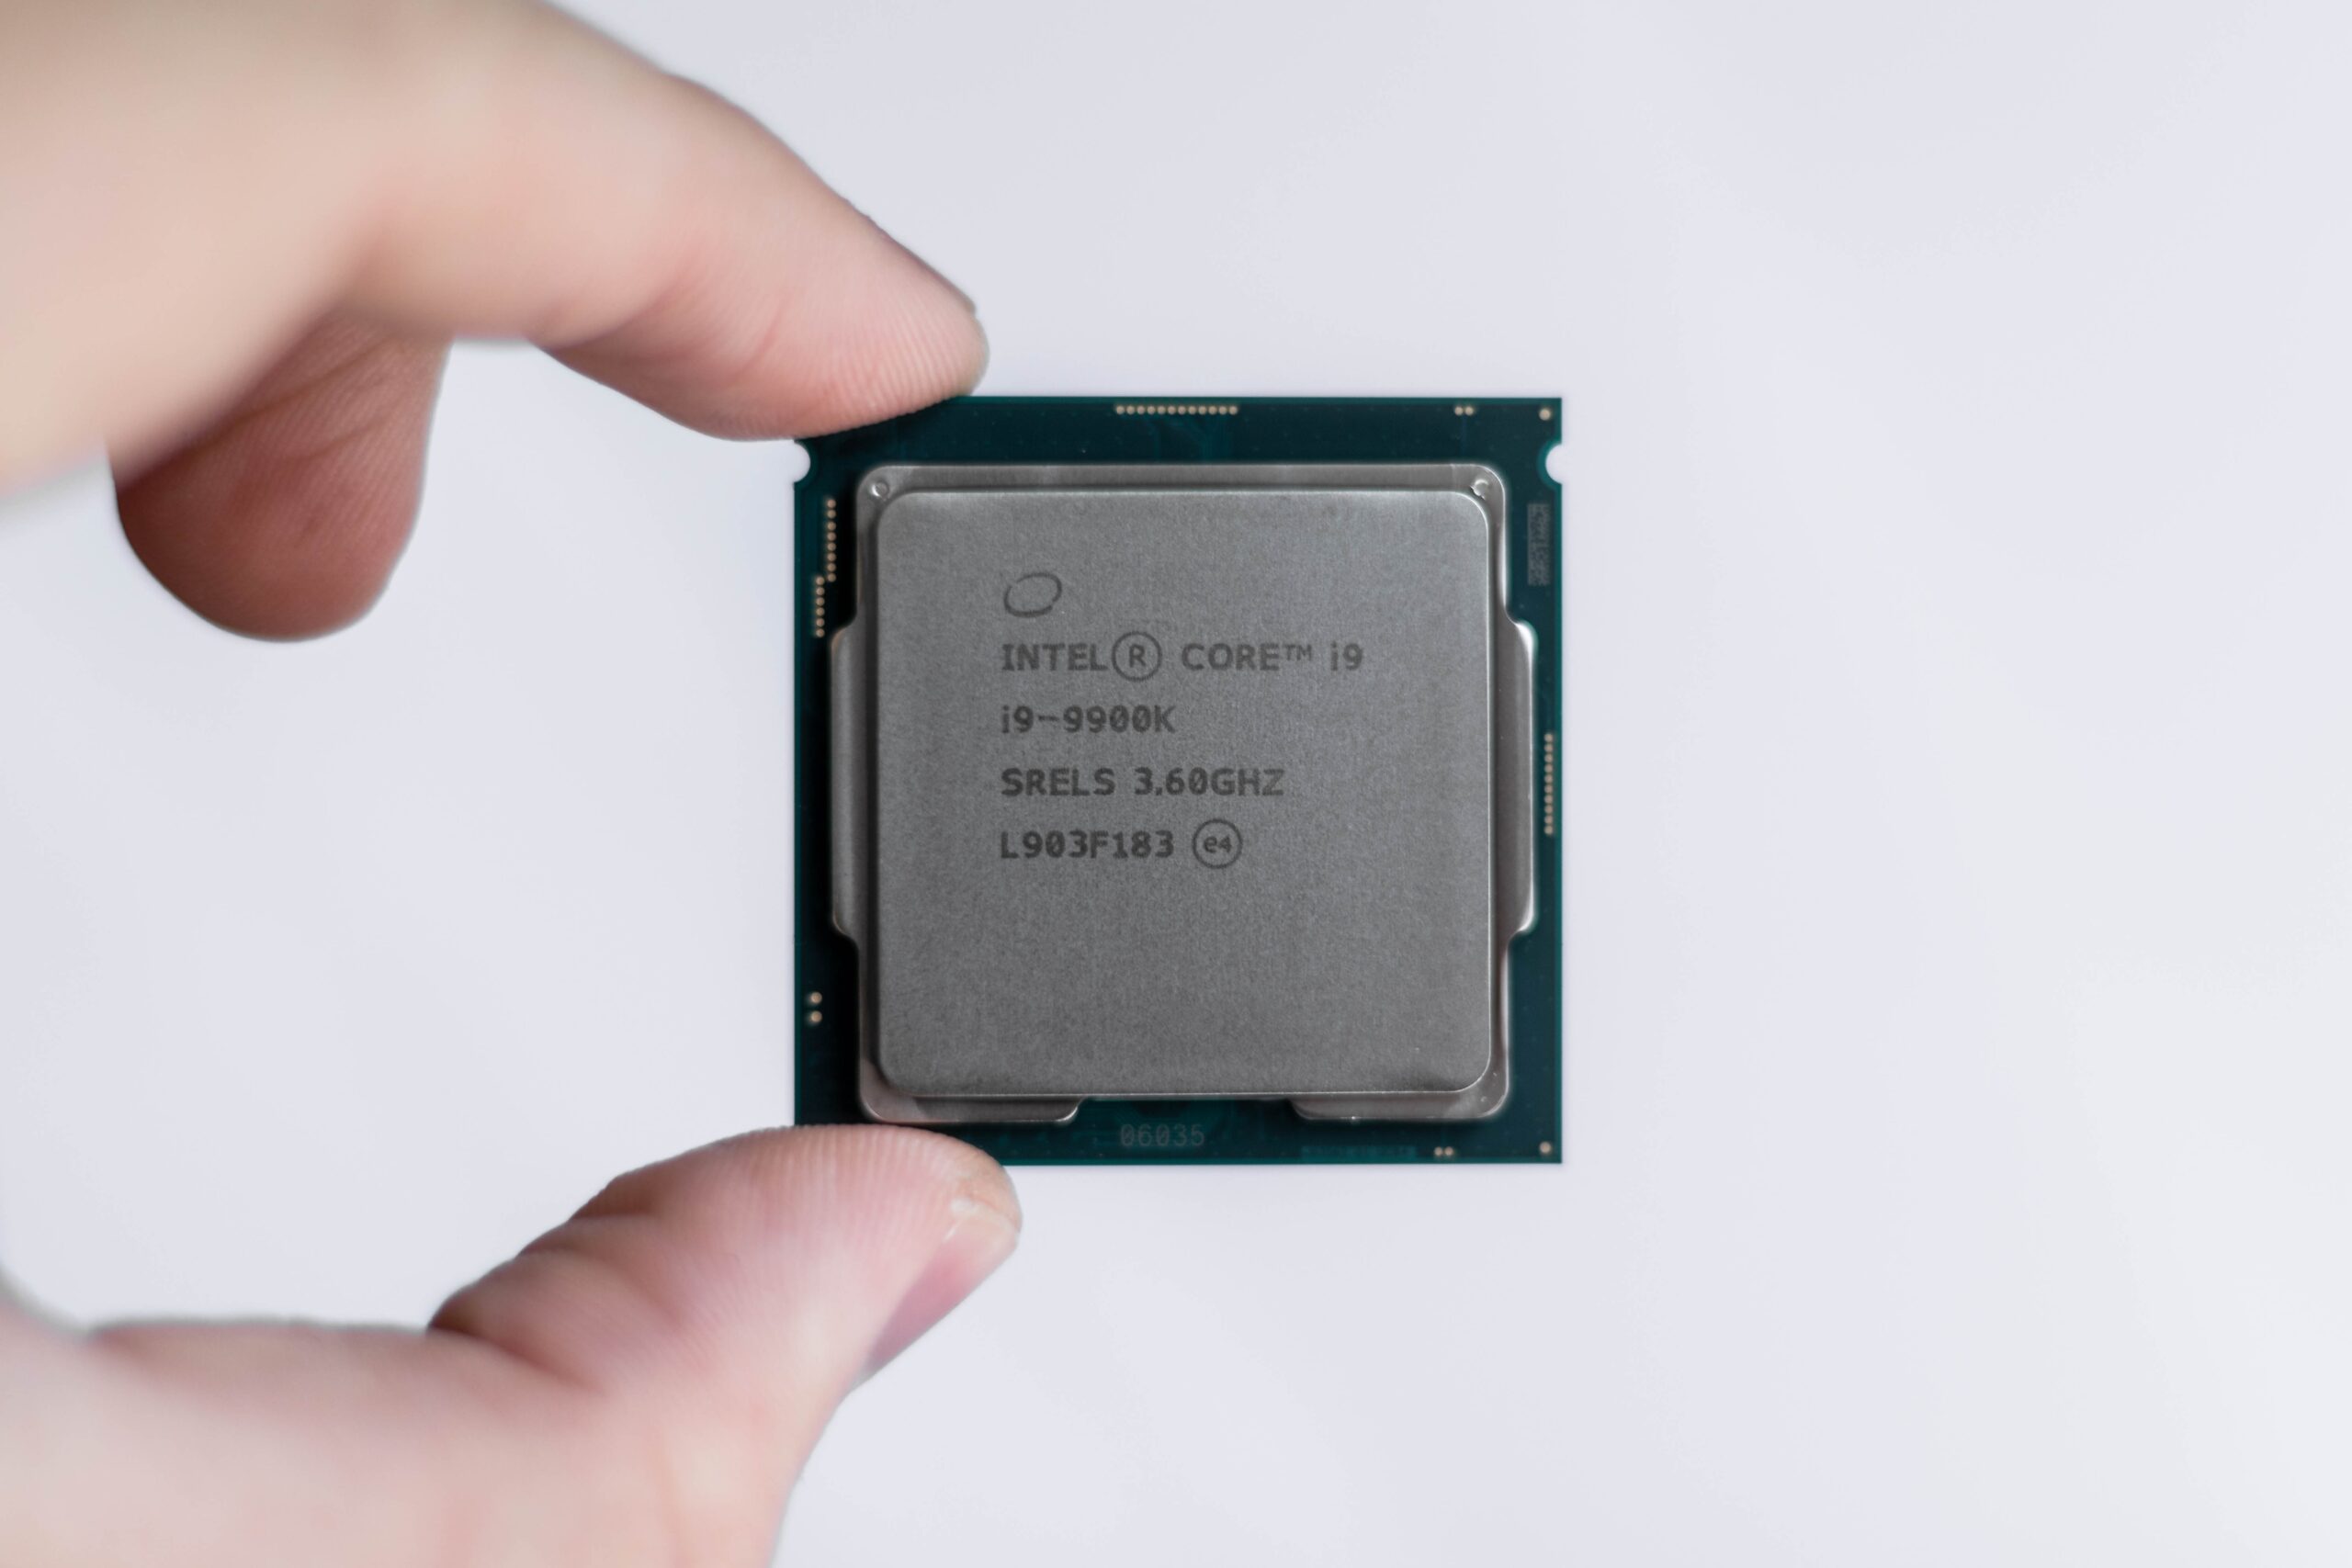 Overclocking Processeur: Booster la performance de votre CPU